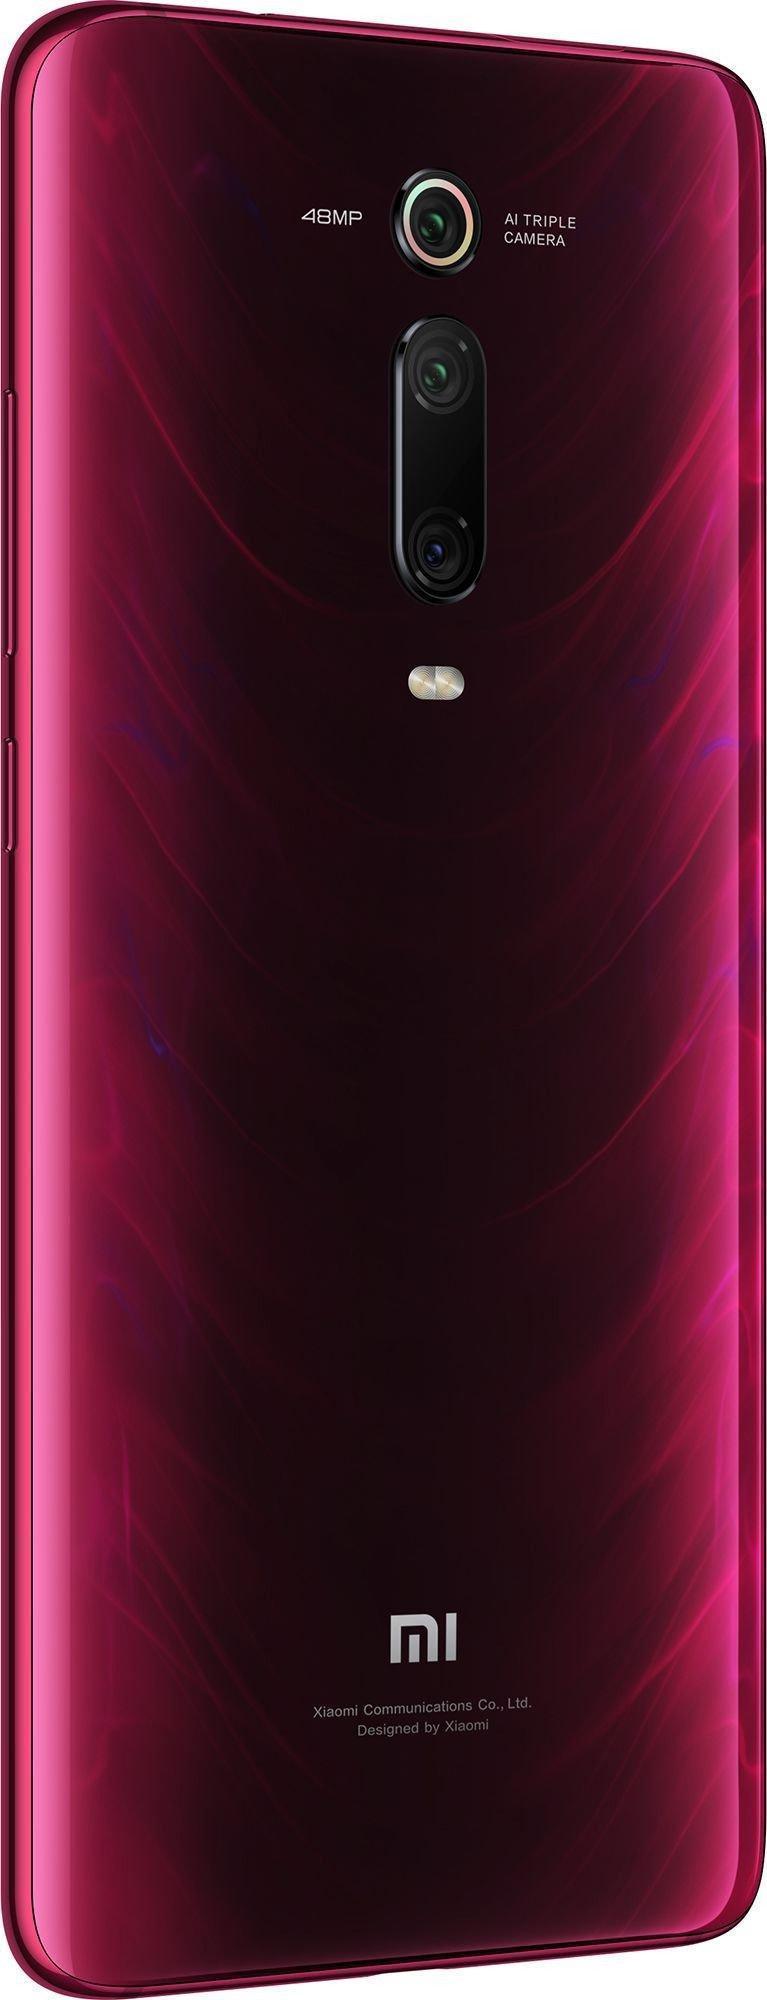 Купить Смартфон Xiaomi Mi 9T Pro 6/64Gb Flame Red